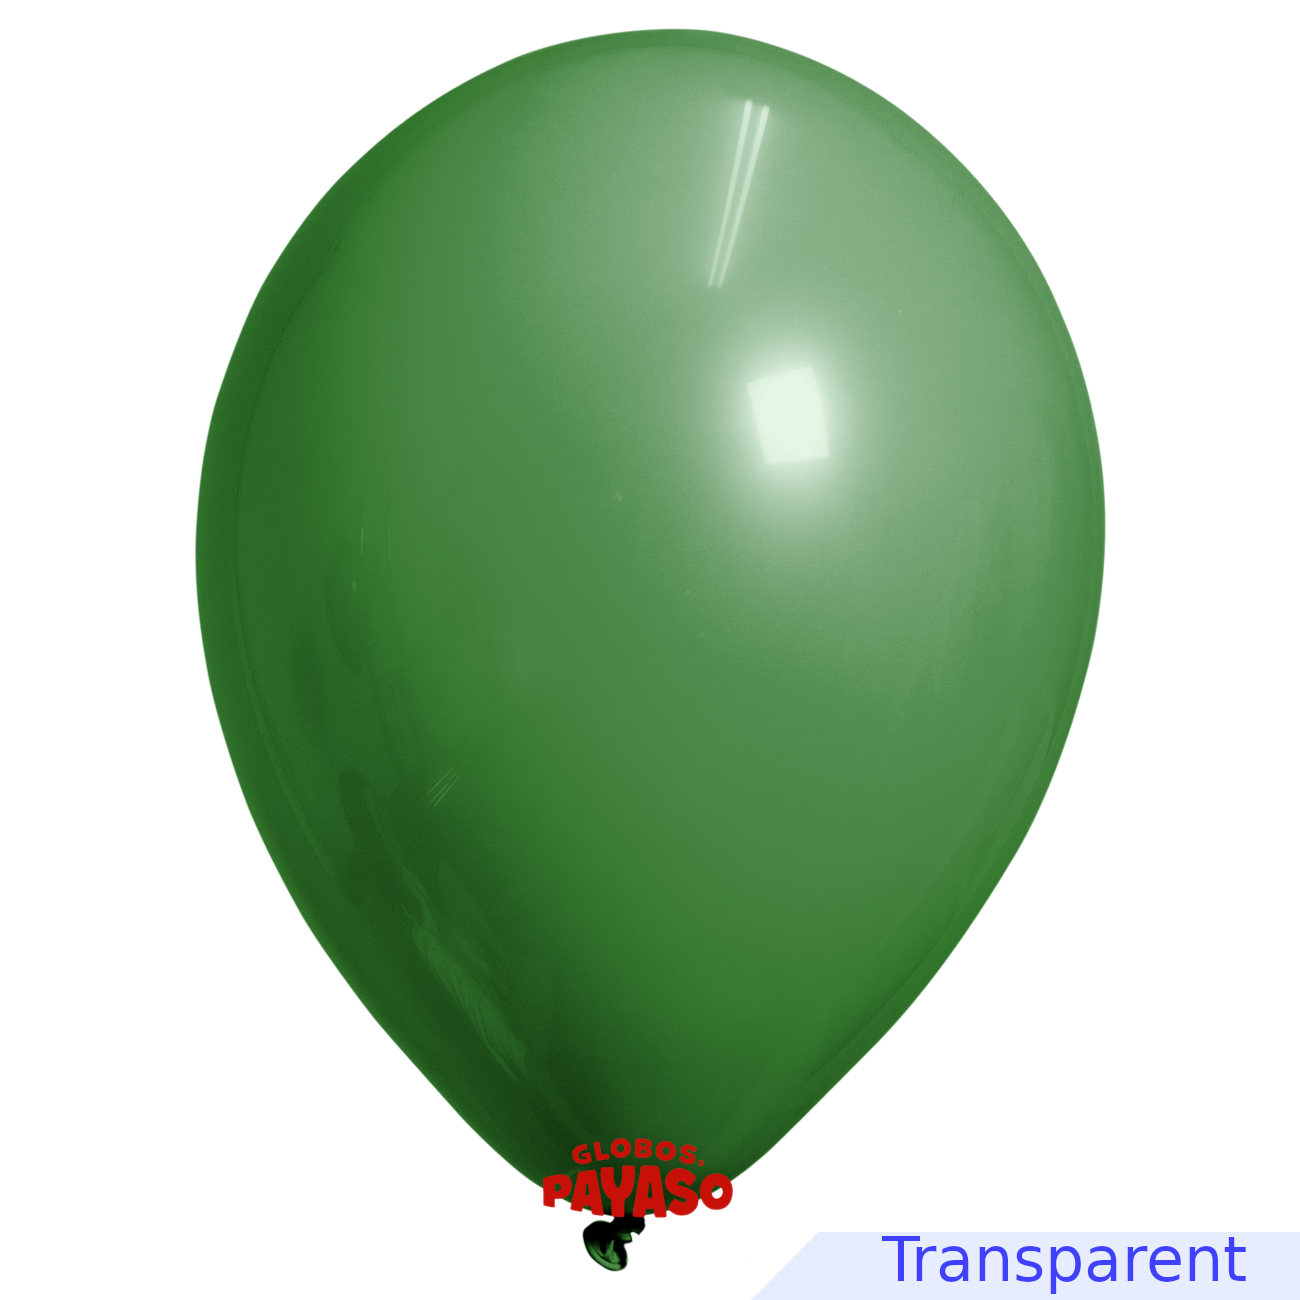 Globos Payaso / Unique 5" Emerald Green Translucid Decorator Balloon